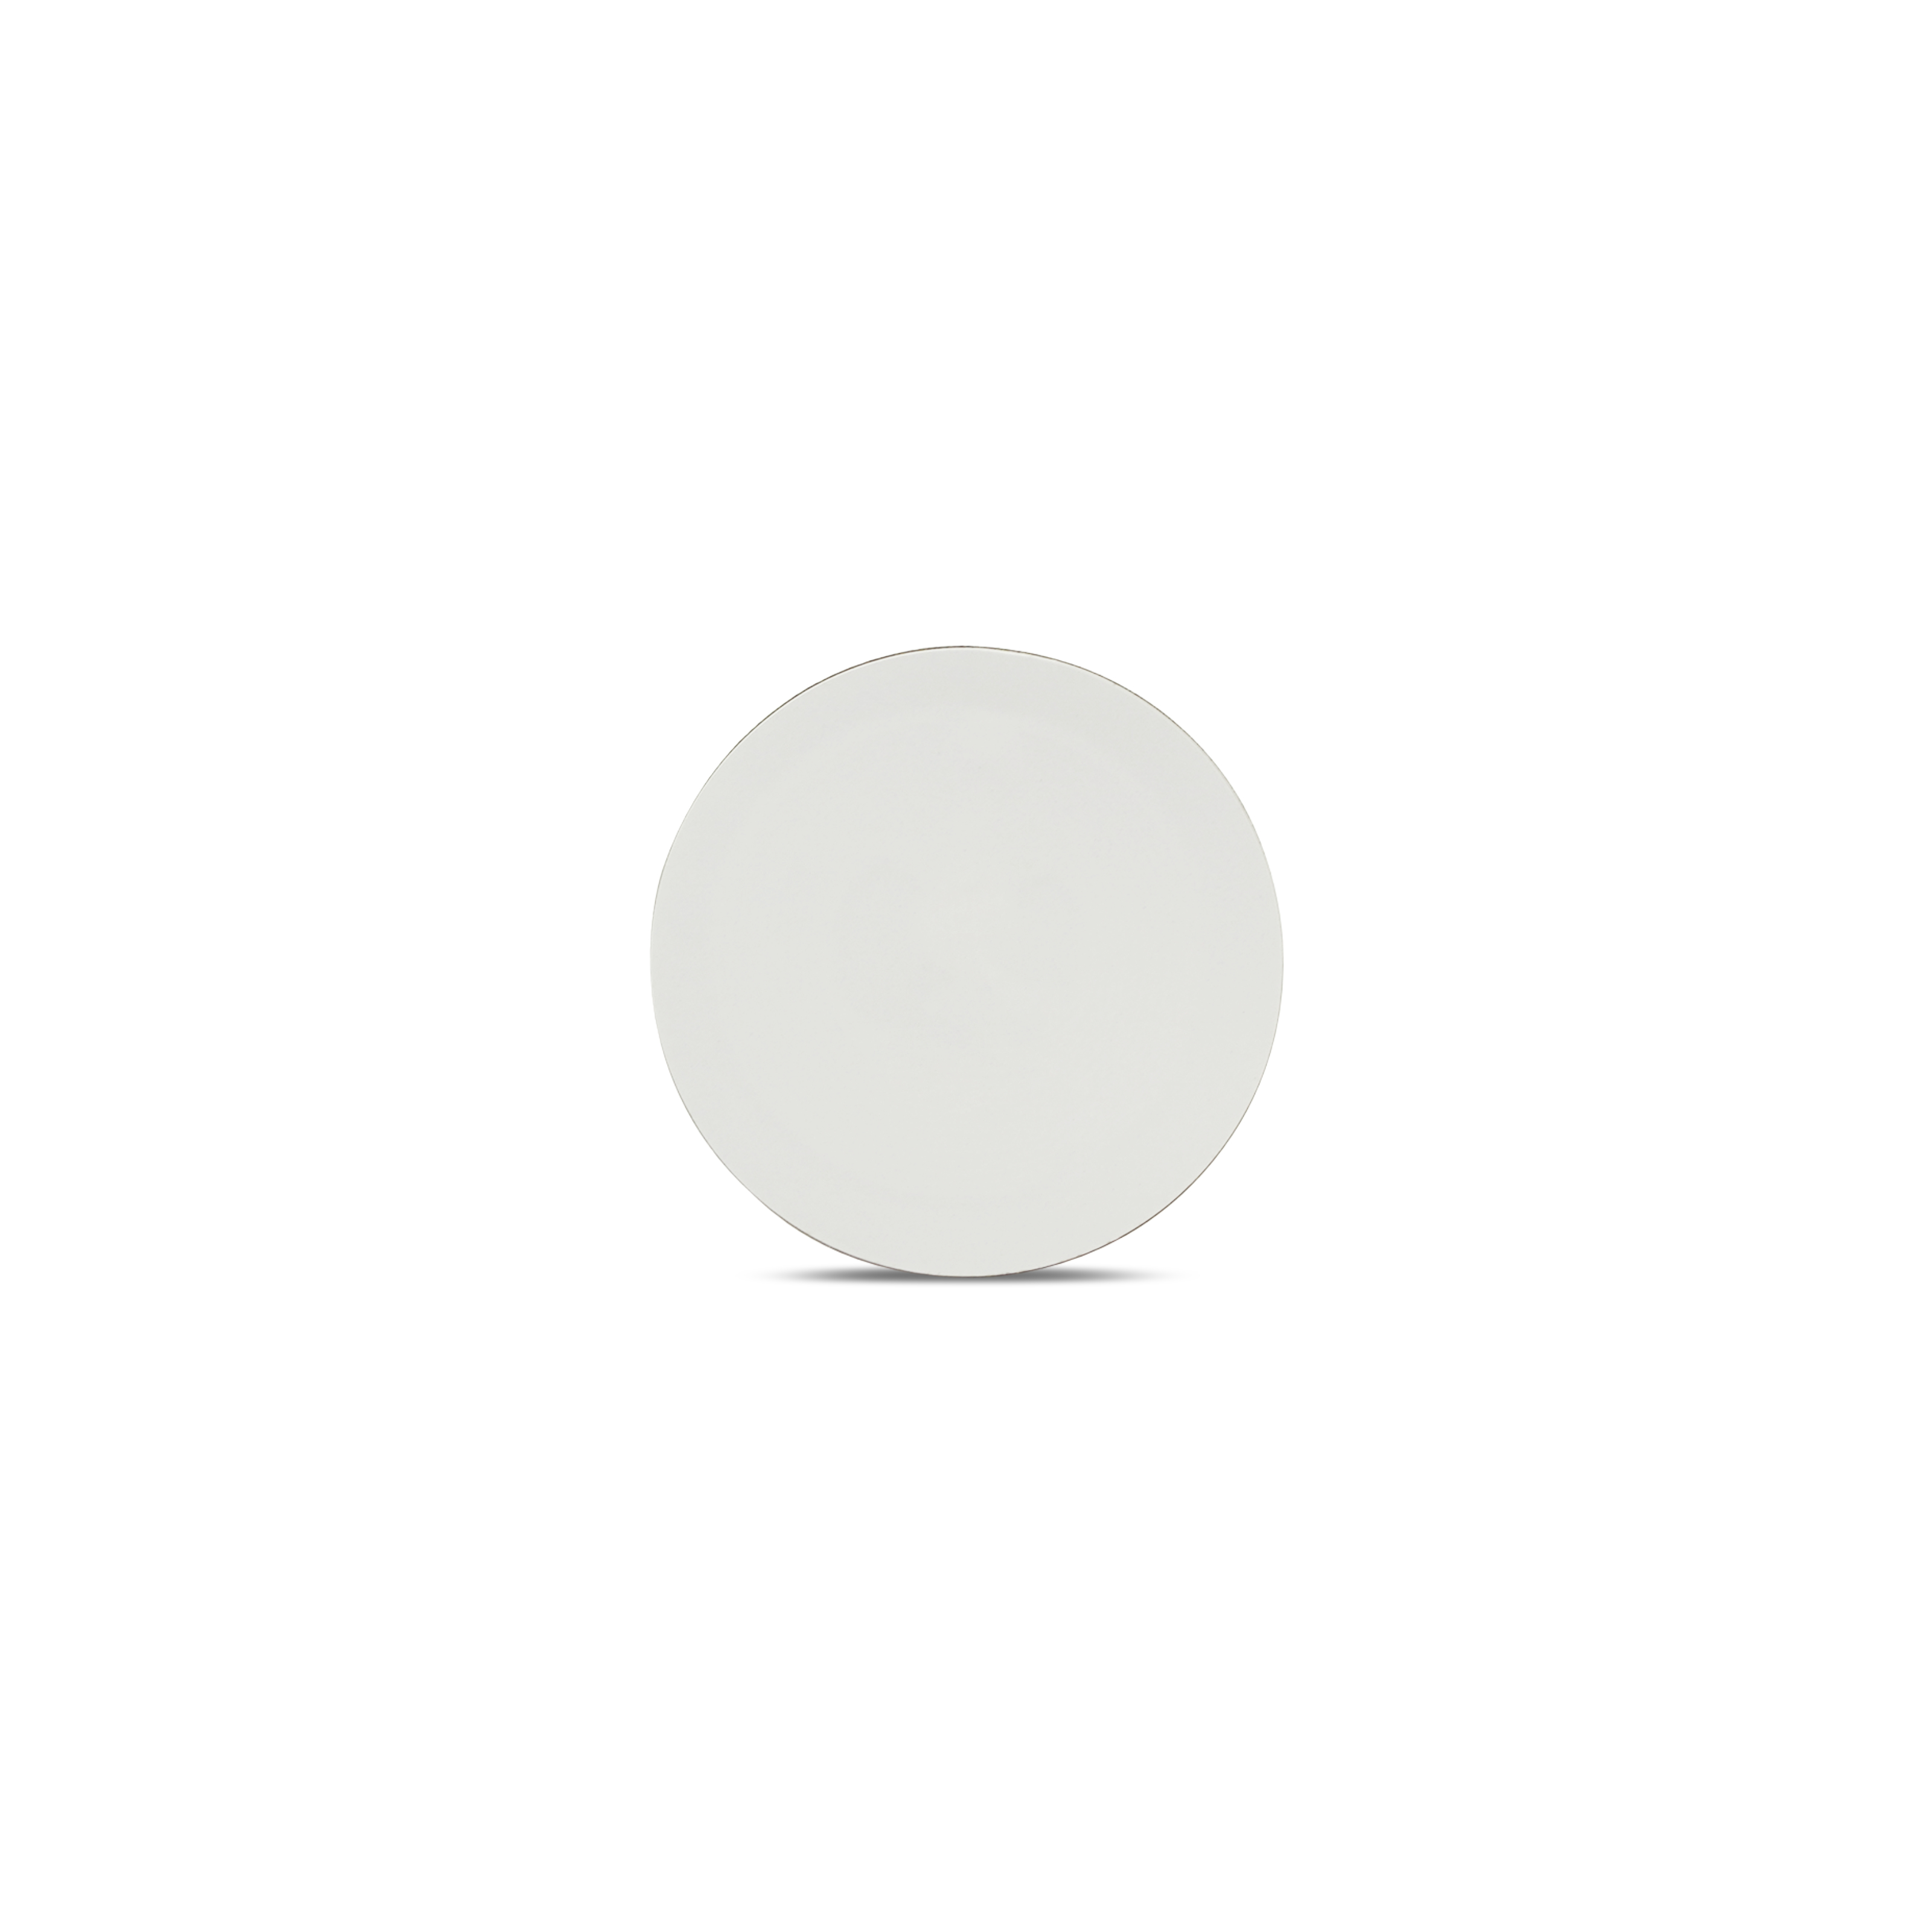 NFC Sticker PET - On-Metal - 30 mm - NTAG213 - 180 Byte - white